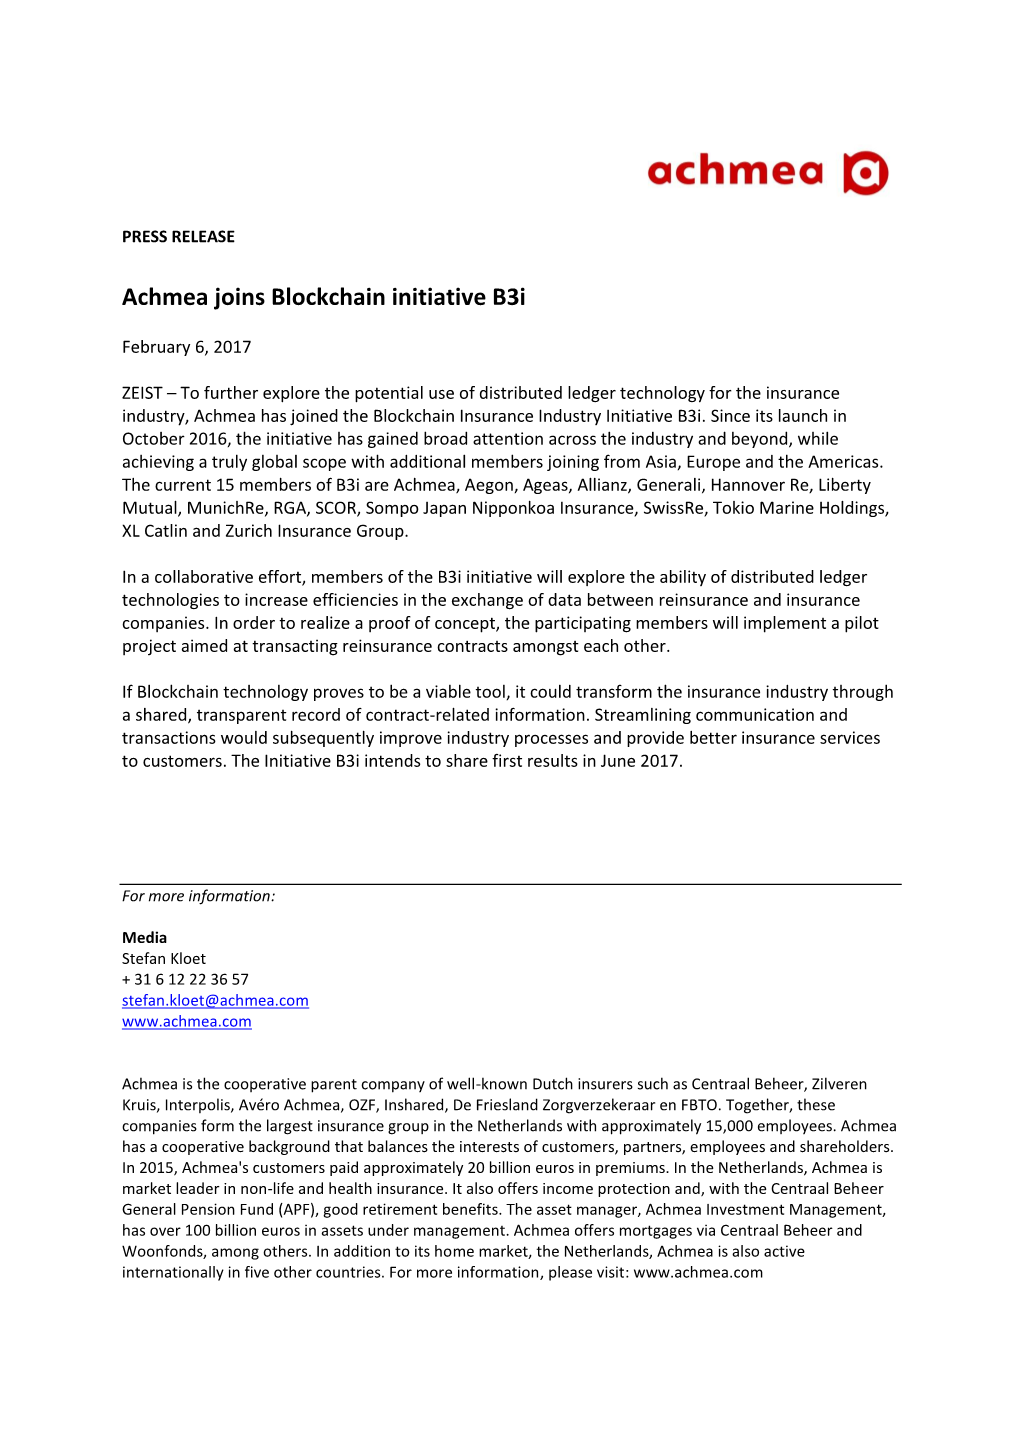 Achmea Joins Blockchain Initiative B3i